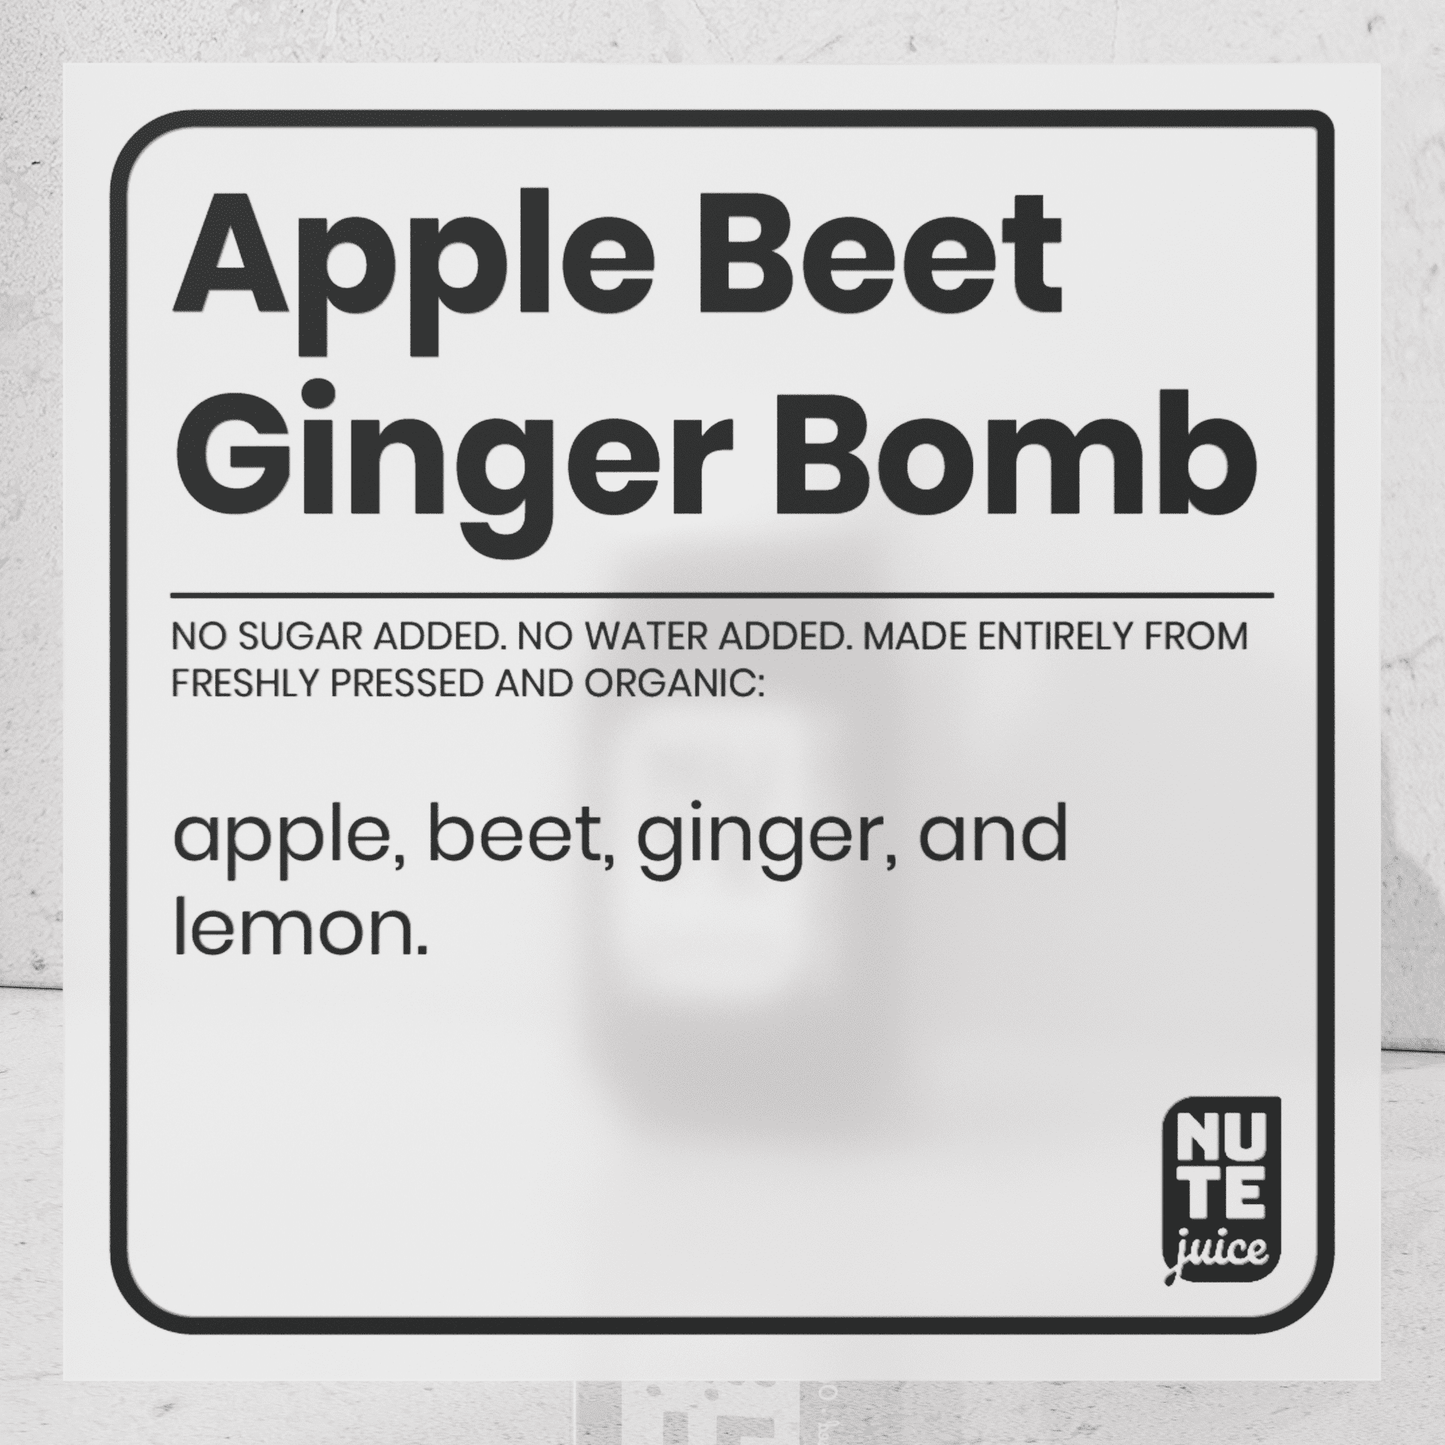 Apple beet ginger bomb ingredients